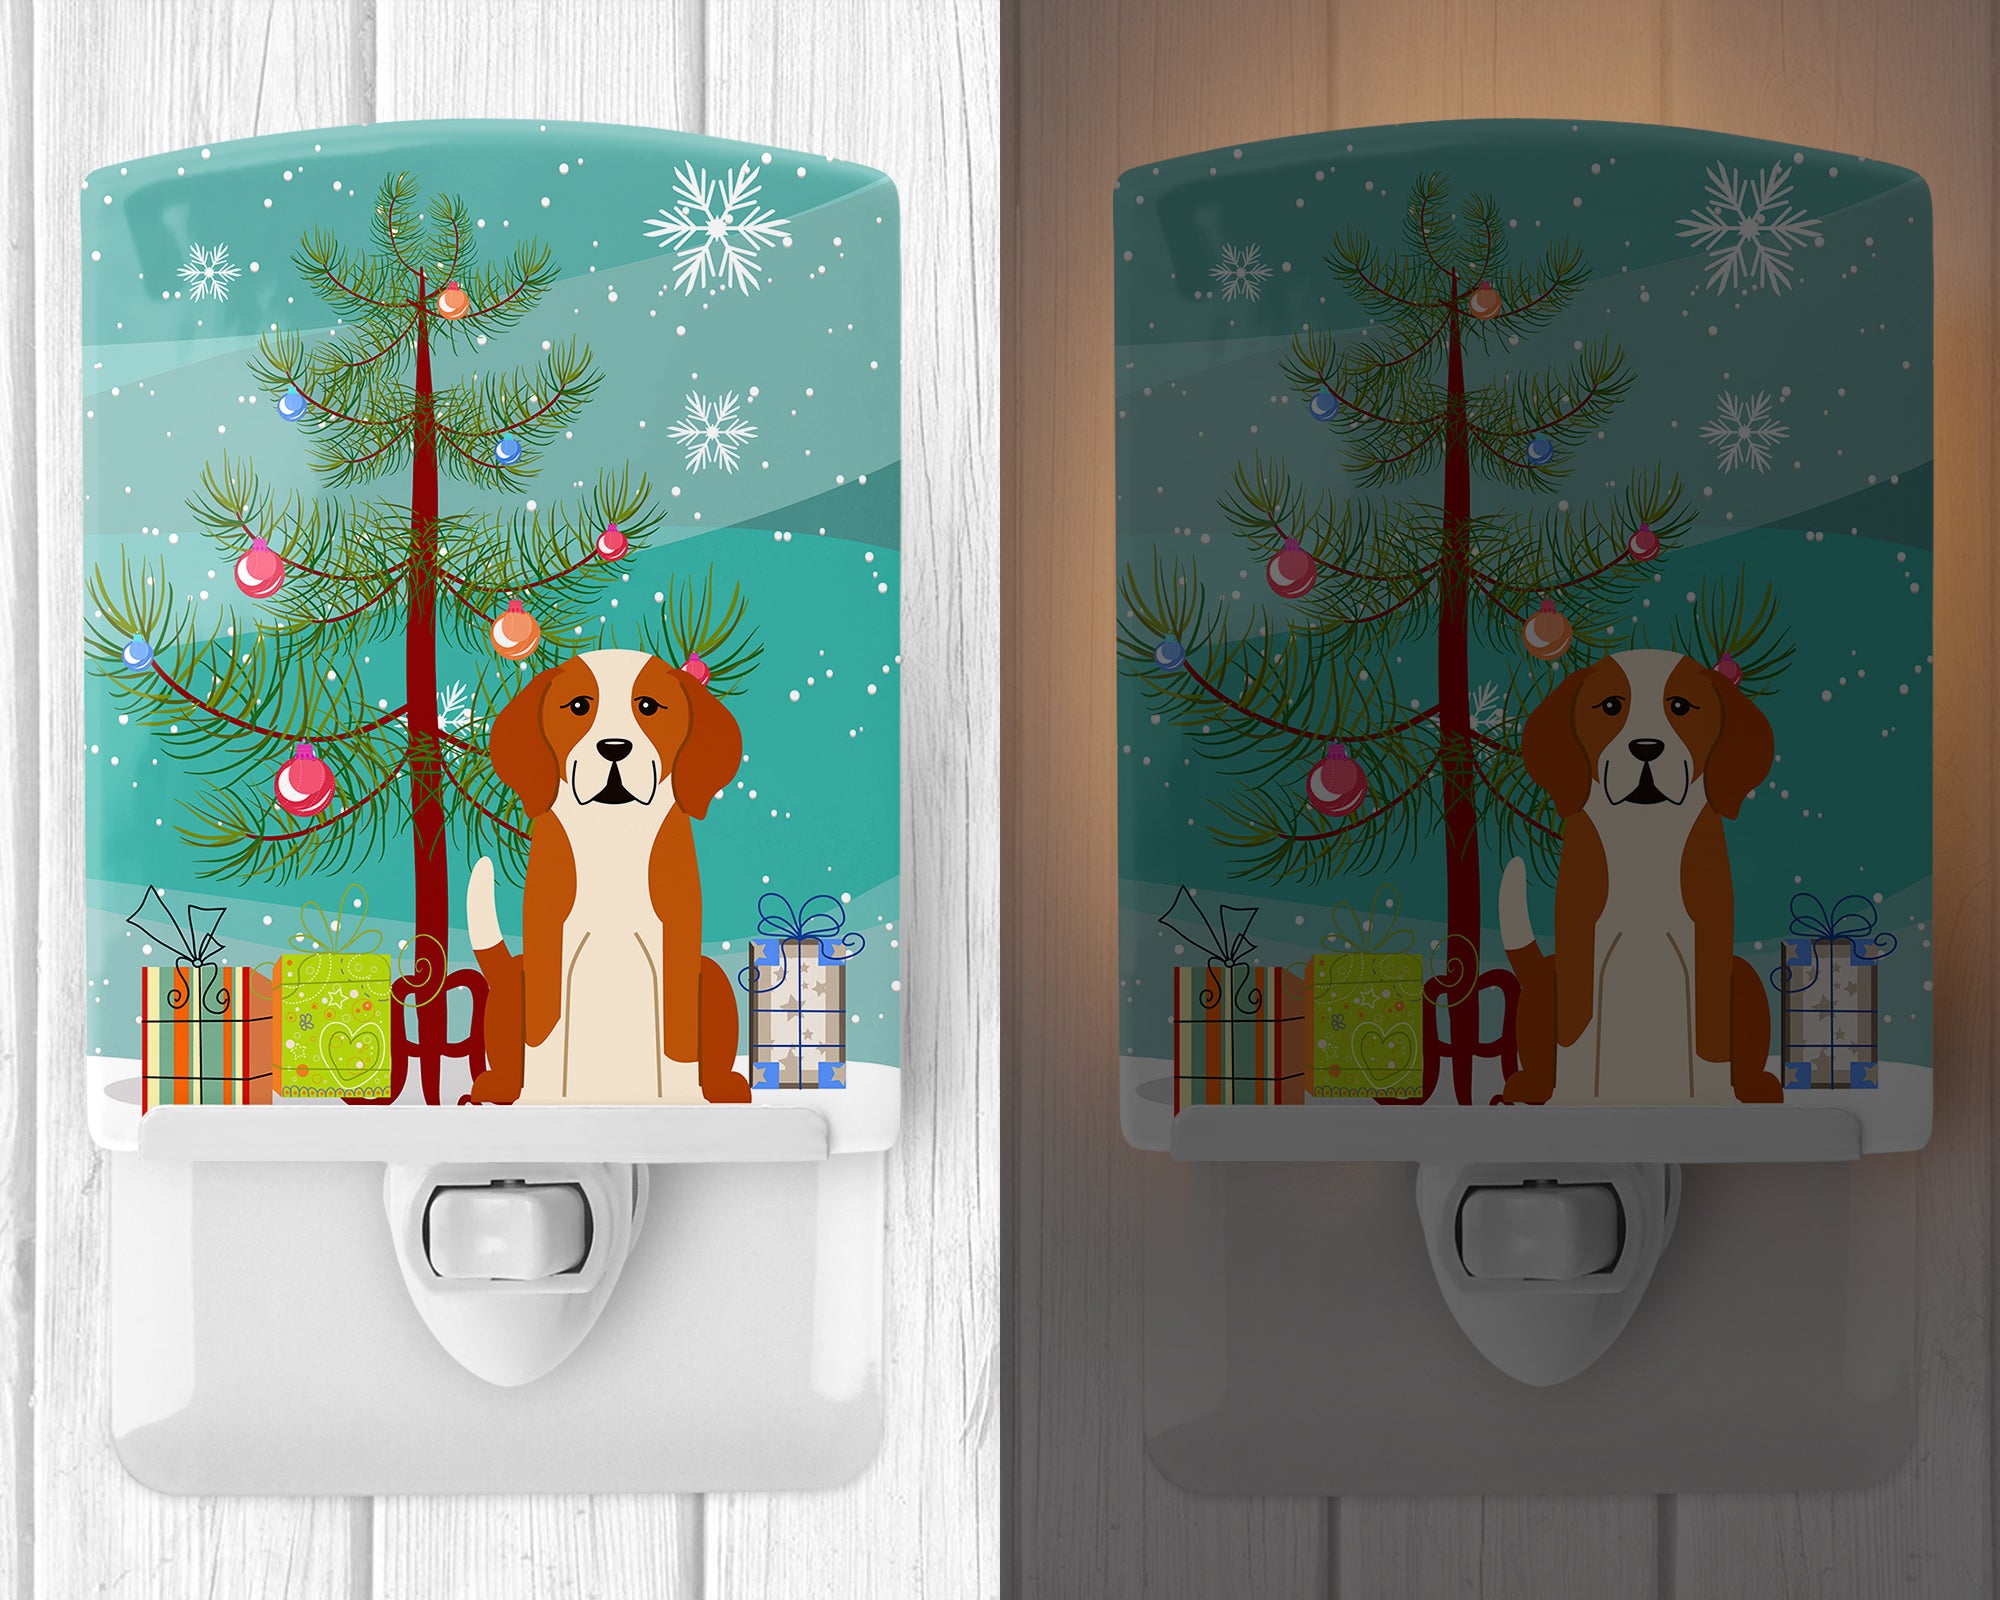 Merry Christmas Tree English Foxhound Ceramic Night Light BB4235CNL - the-store.com